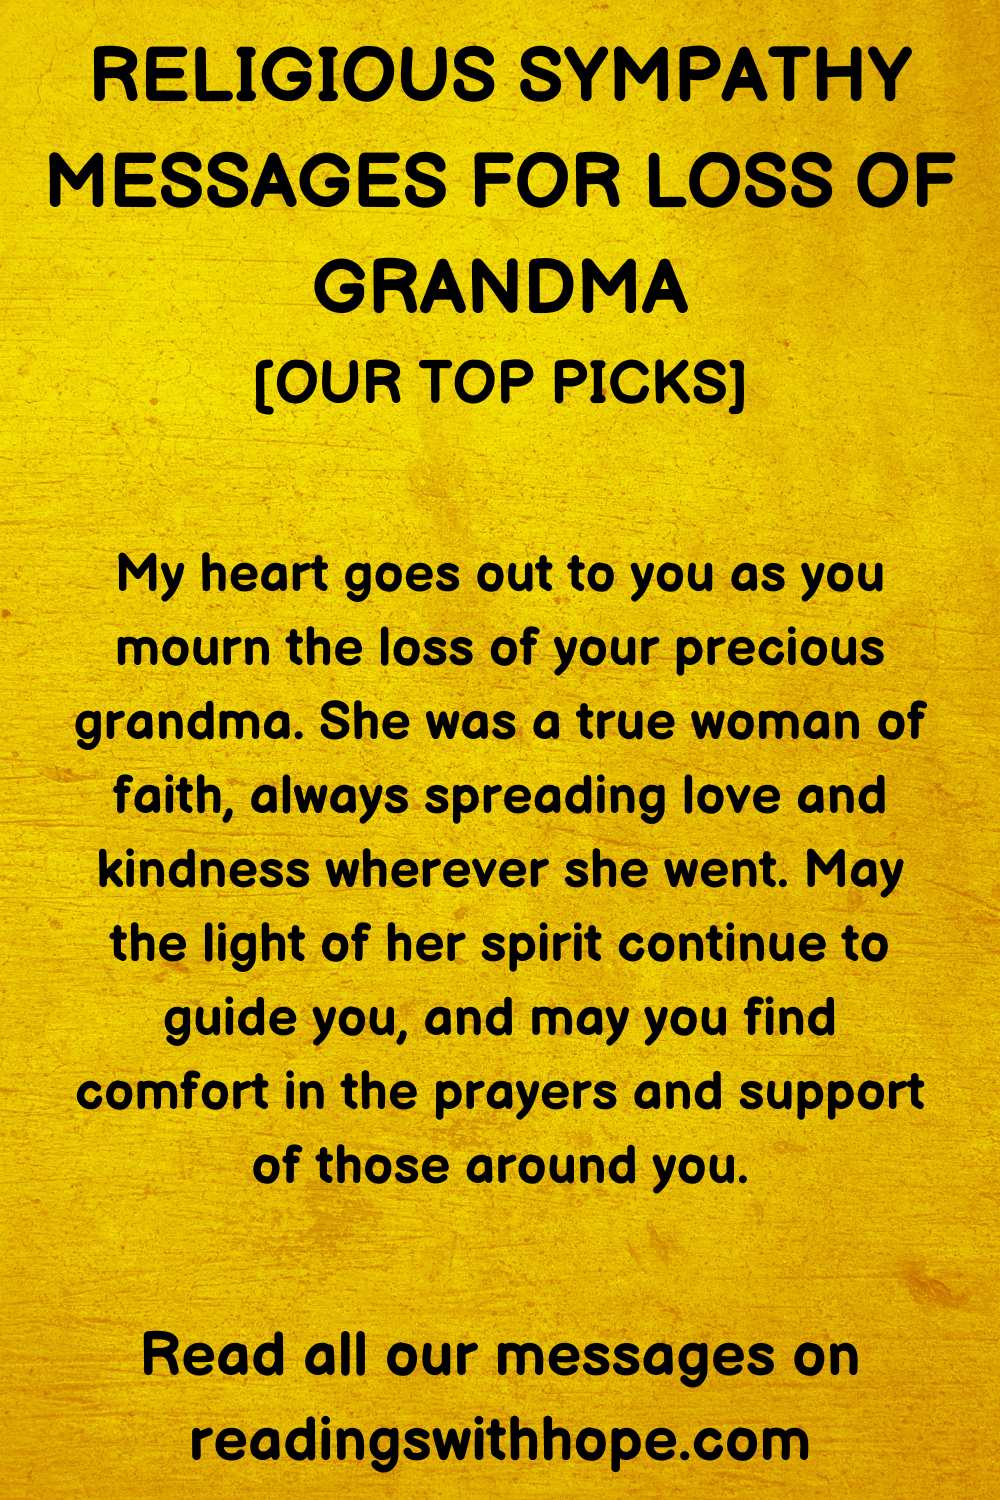 Religious Sympathy Message for Loss of Grandma
